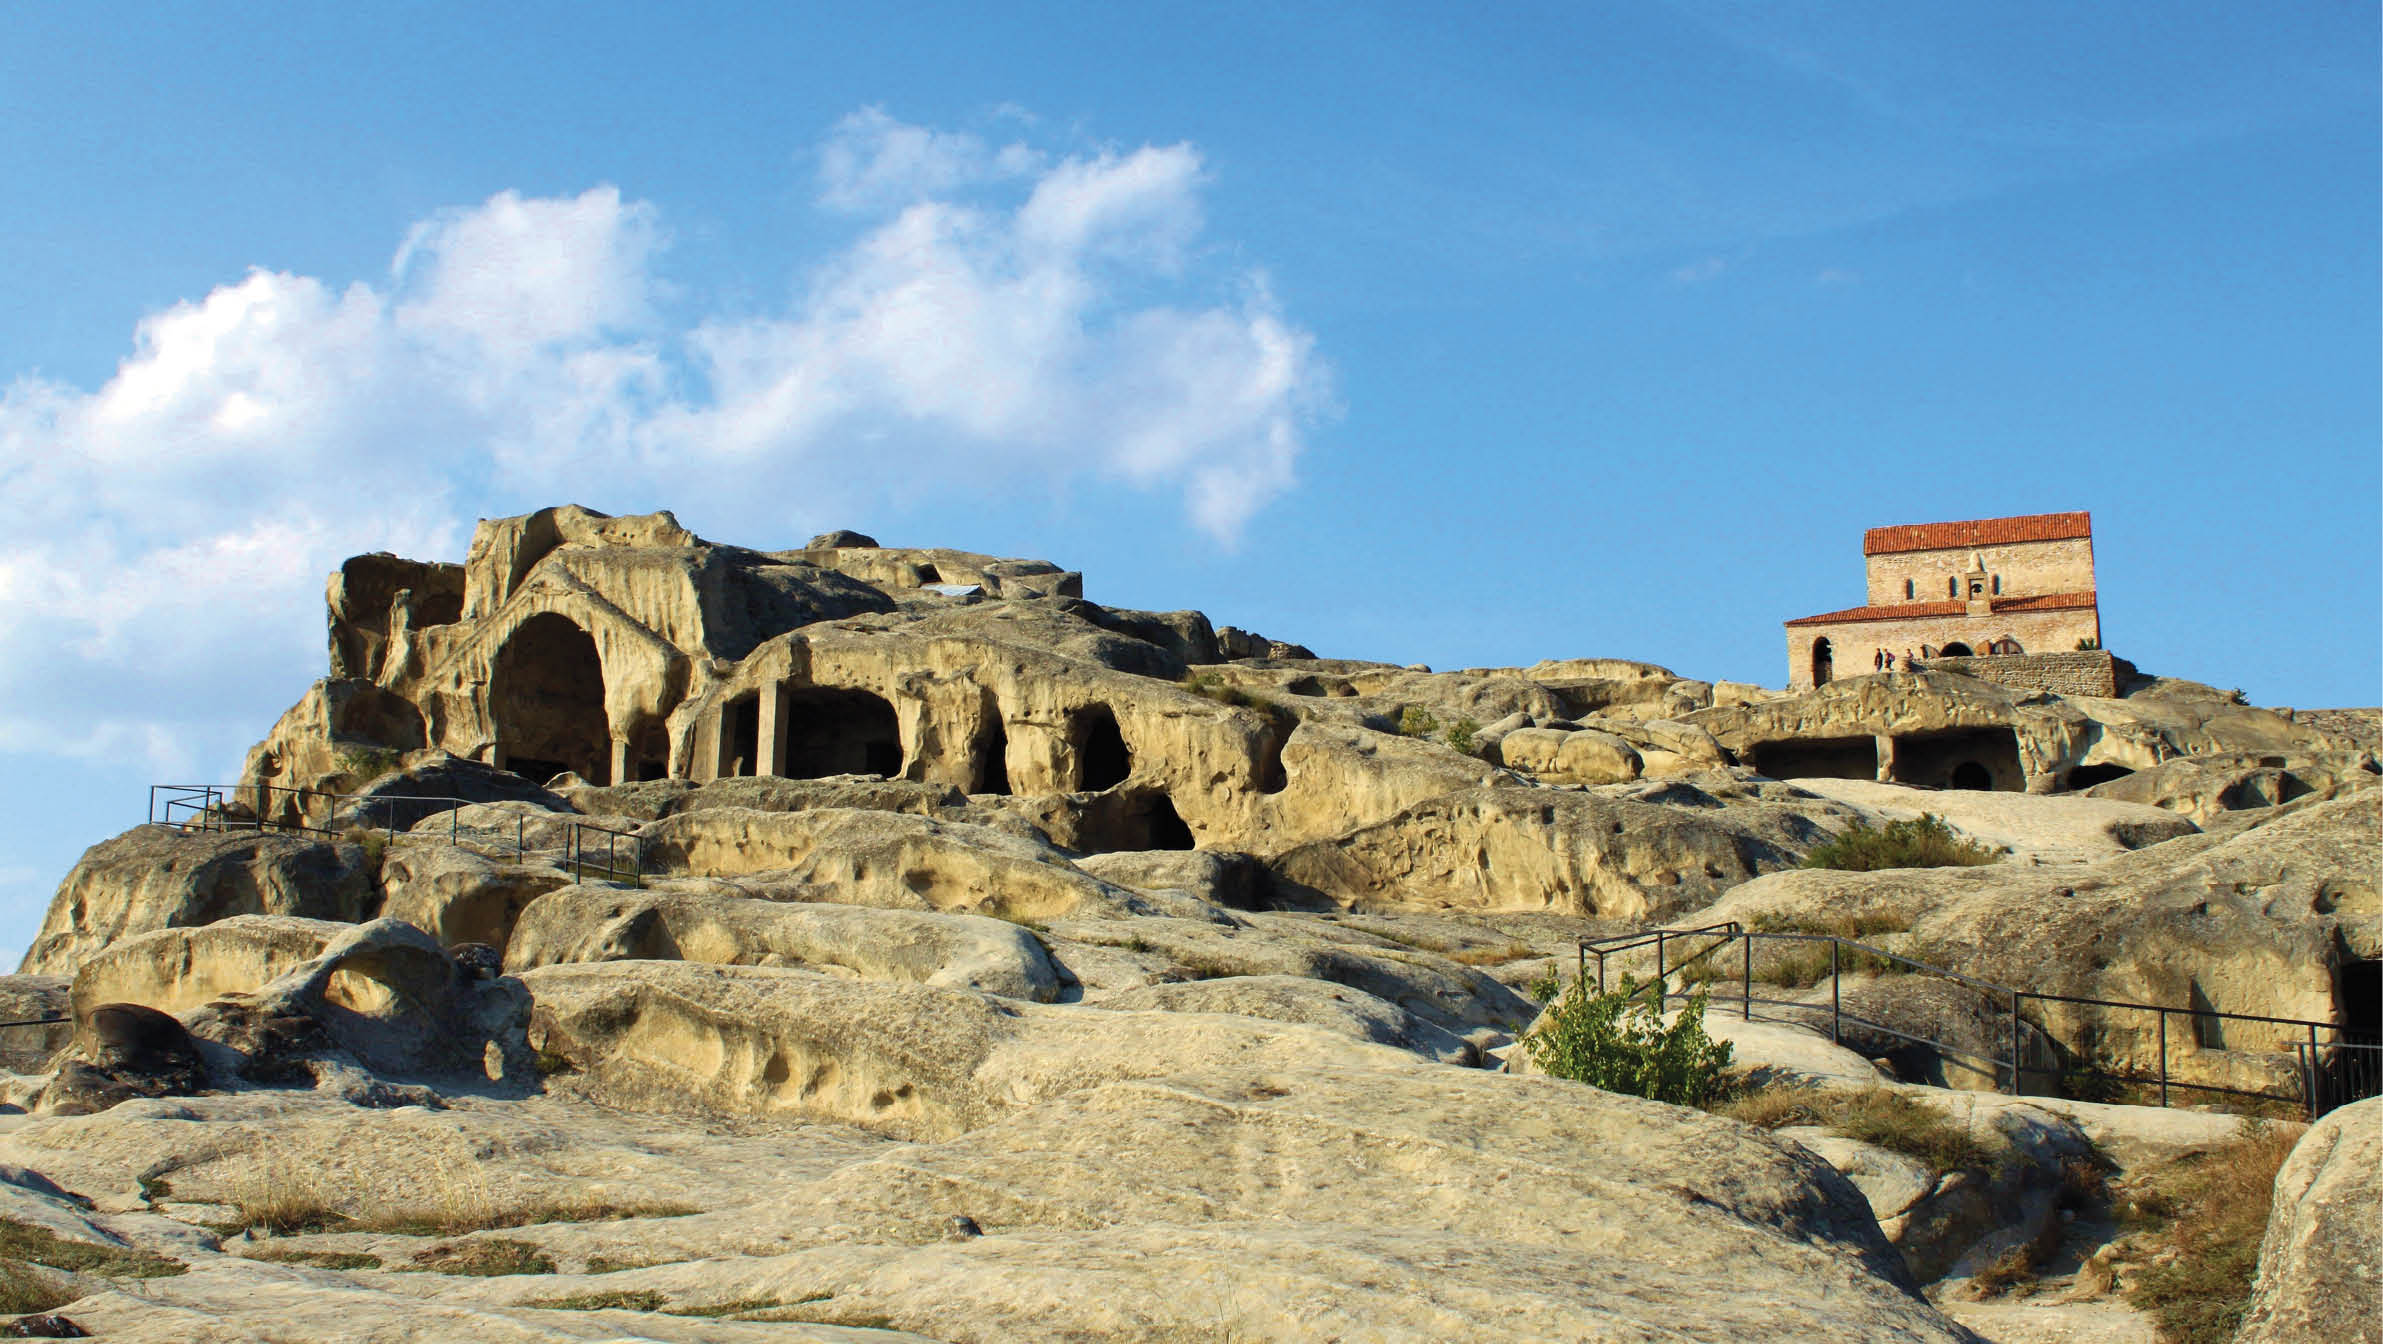 Ancient cave monastery of David Gareji carved into the rocks on the border of Georgia and Azerbaijan.